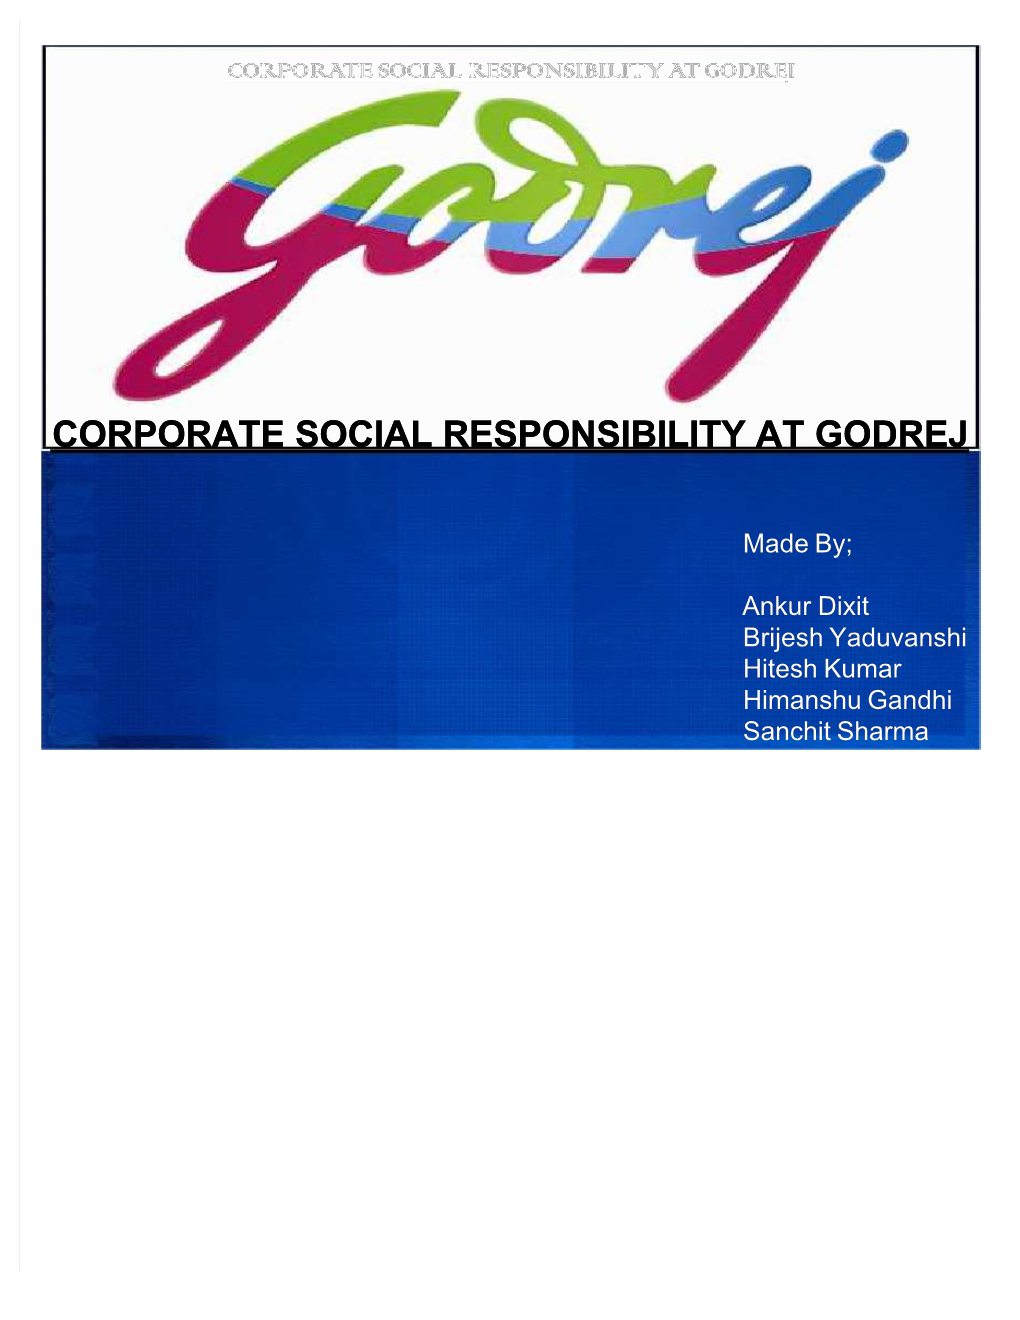 Corporate Social Responsibility at Godrej